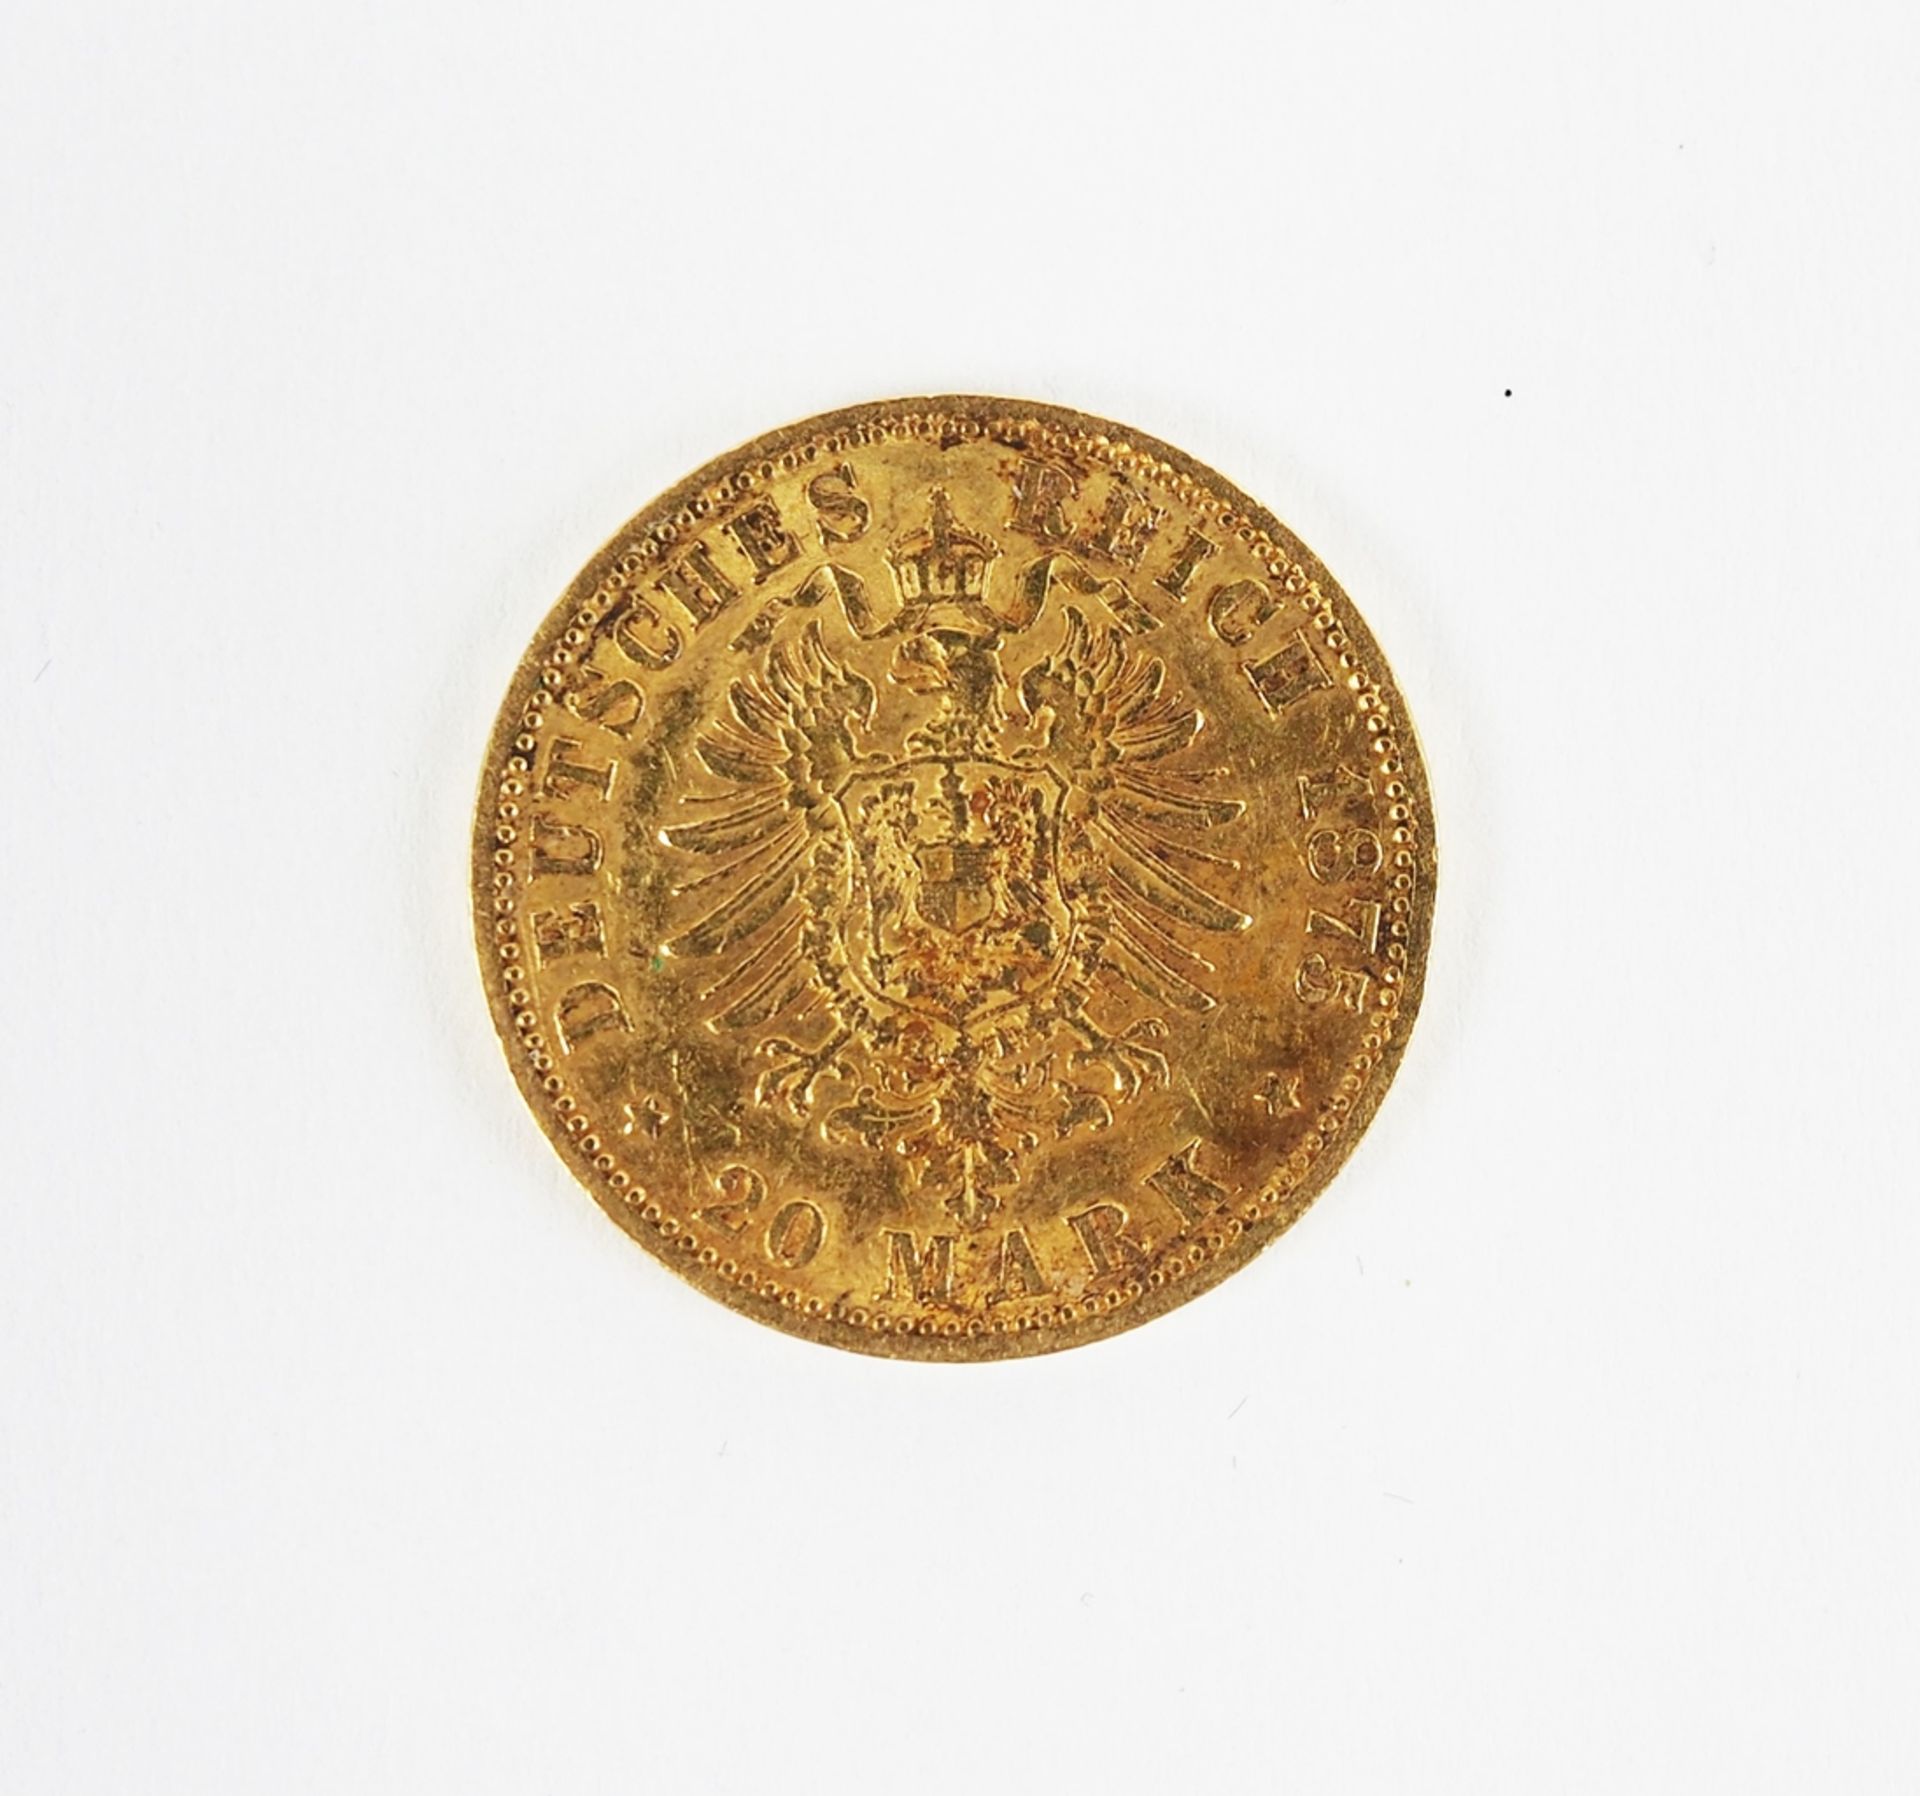 Preussen: 20 Mark 1875 - GOLD. - Image 2 of 2